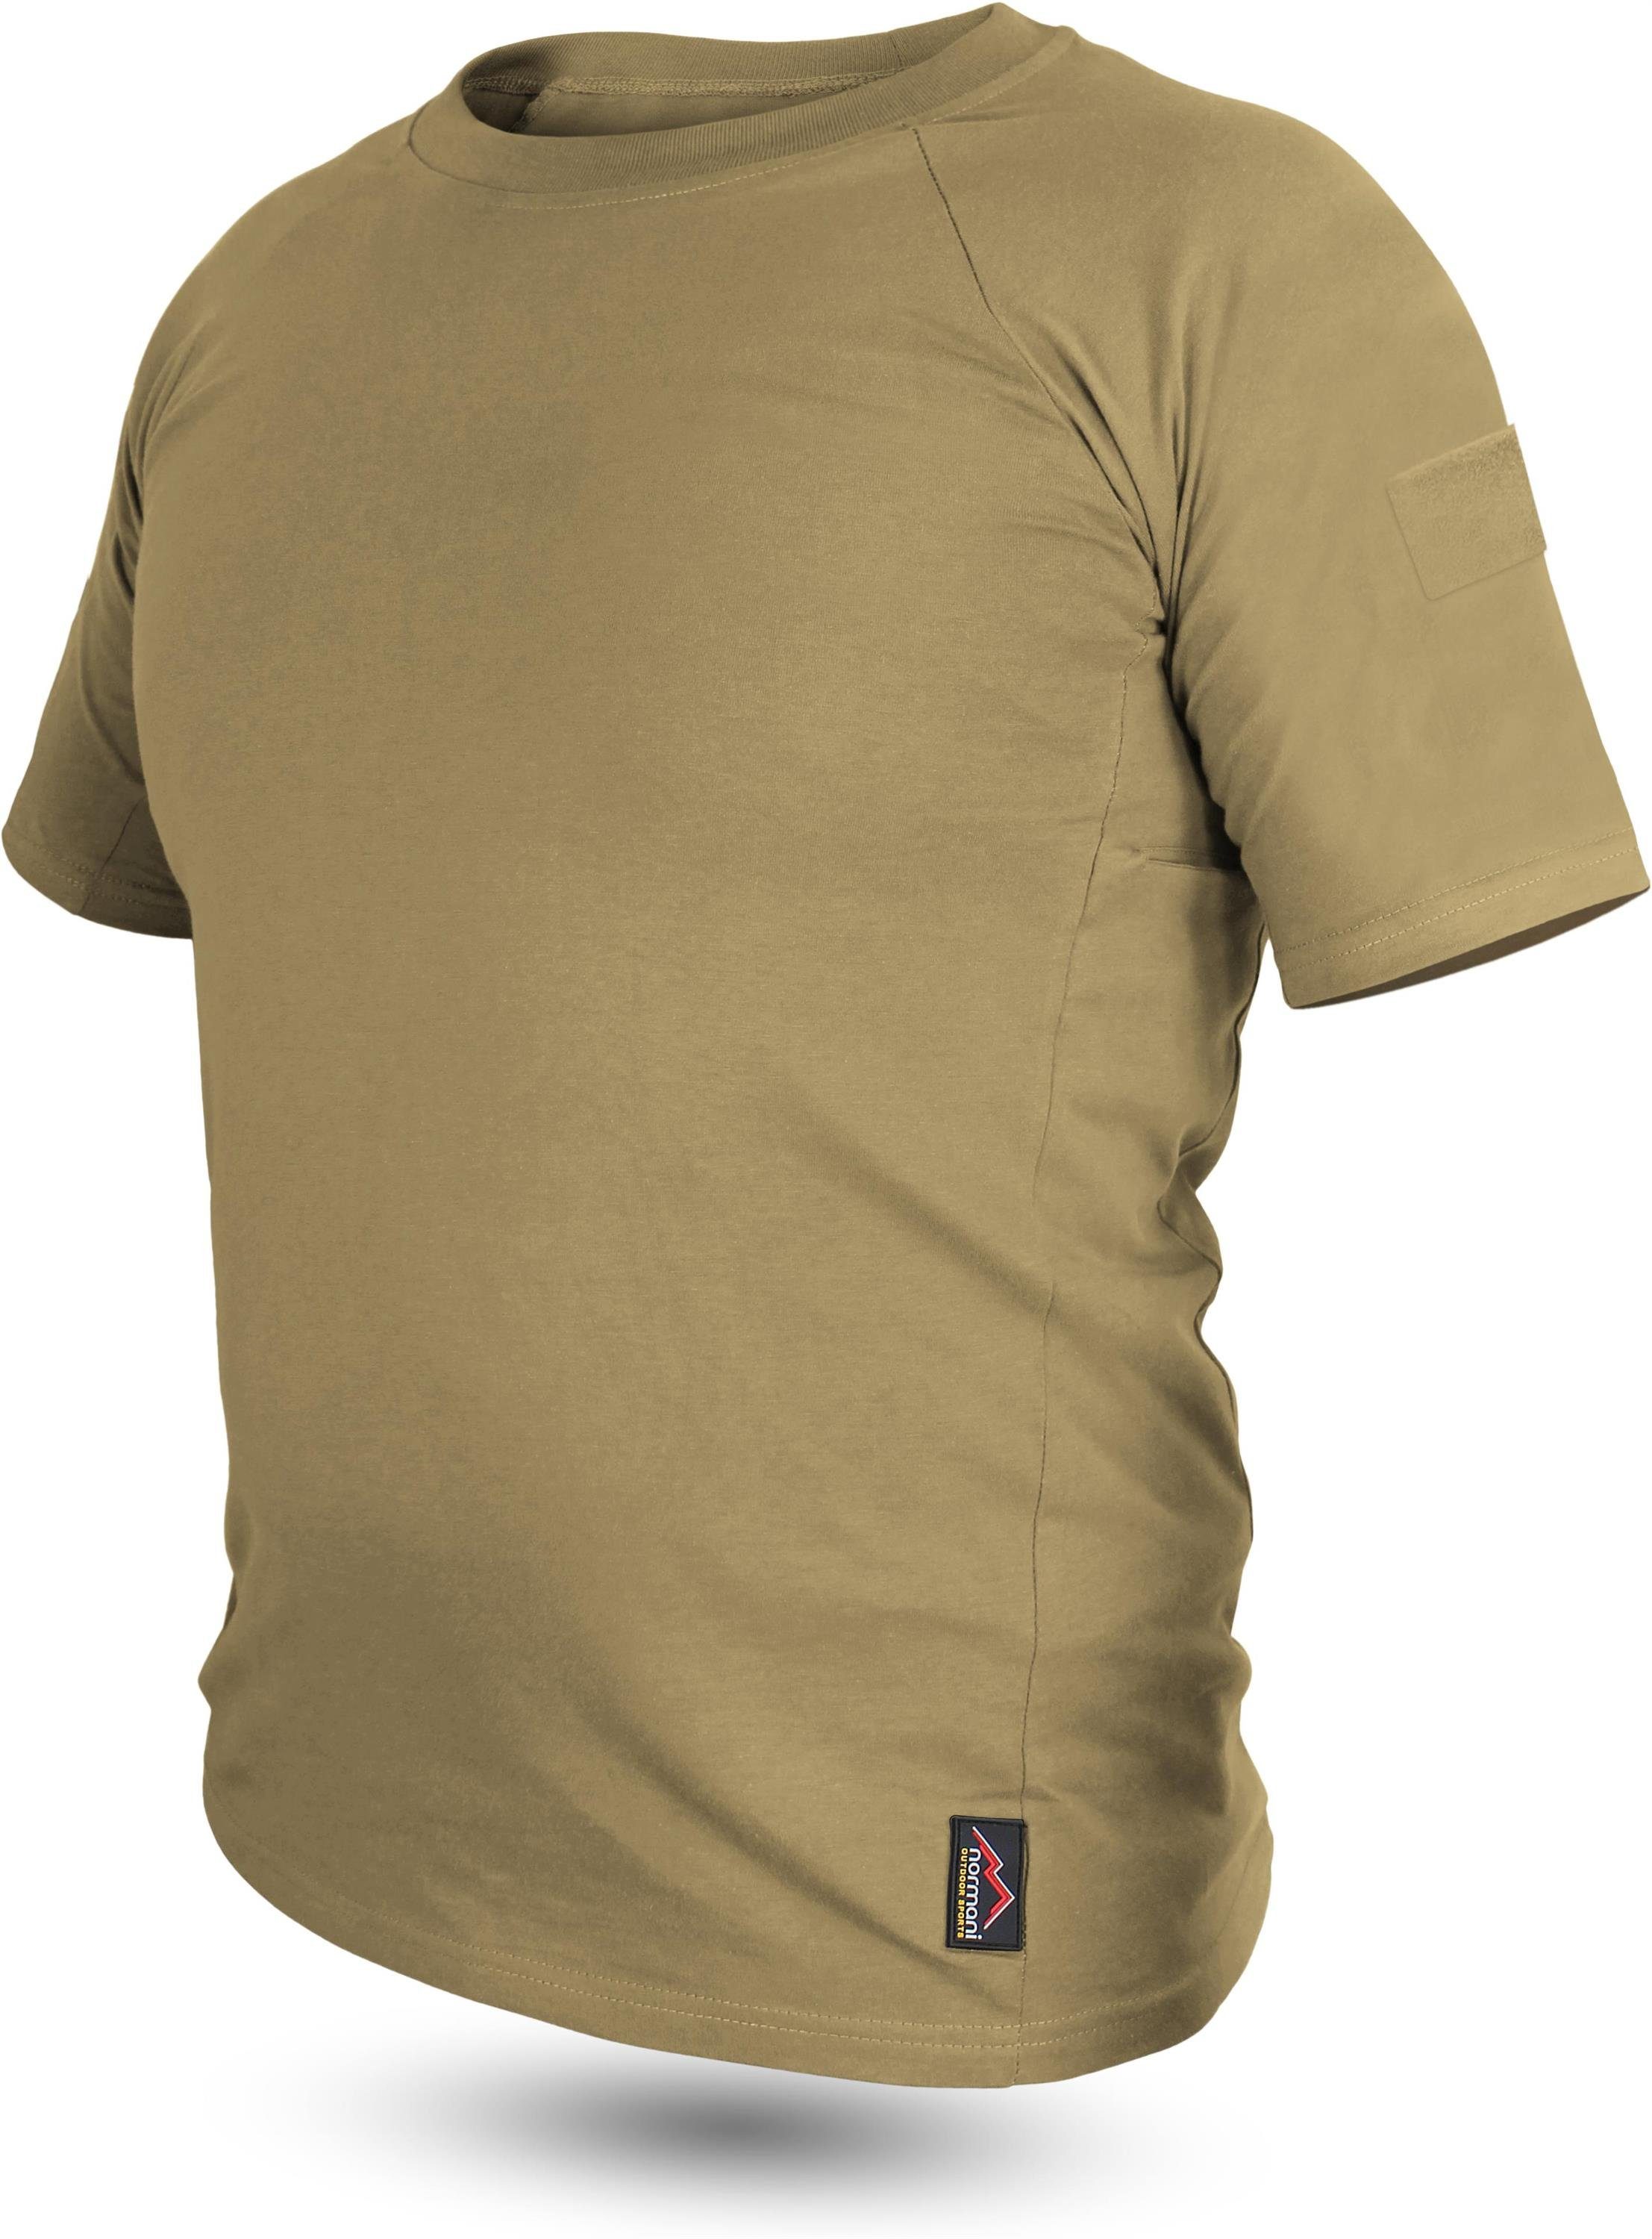 Sommer Herren auf Taktisches Khaki Klettflächen Funktionsshirt Paintball Shirt T-Shirt Kurzarm Captain den T-Shirt Kampfshirt normani mit Armen